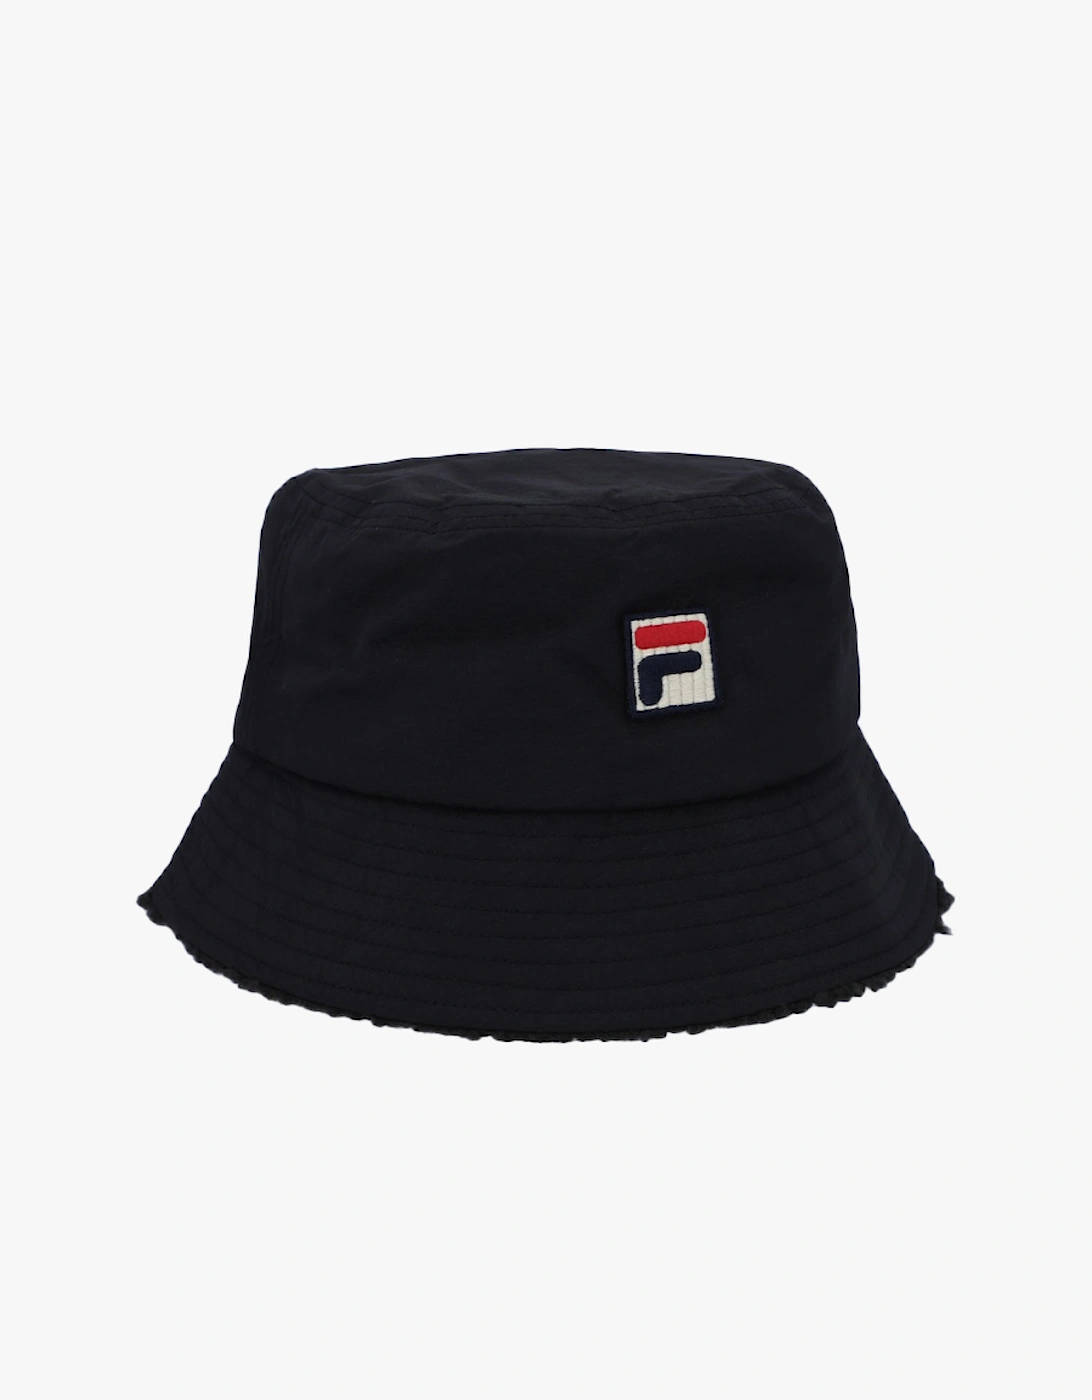 Bevans Sherpa Lined Bucket Hat - Black